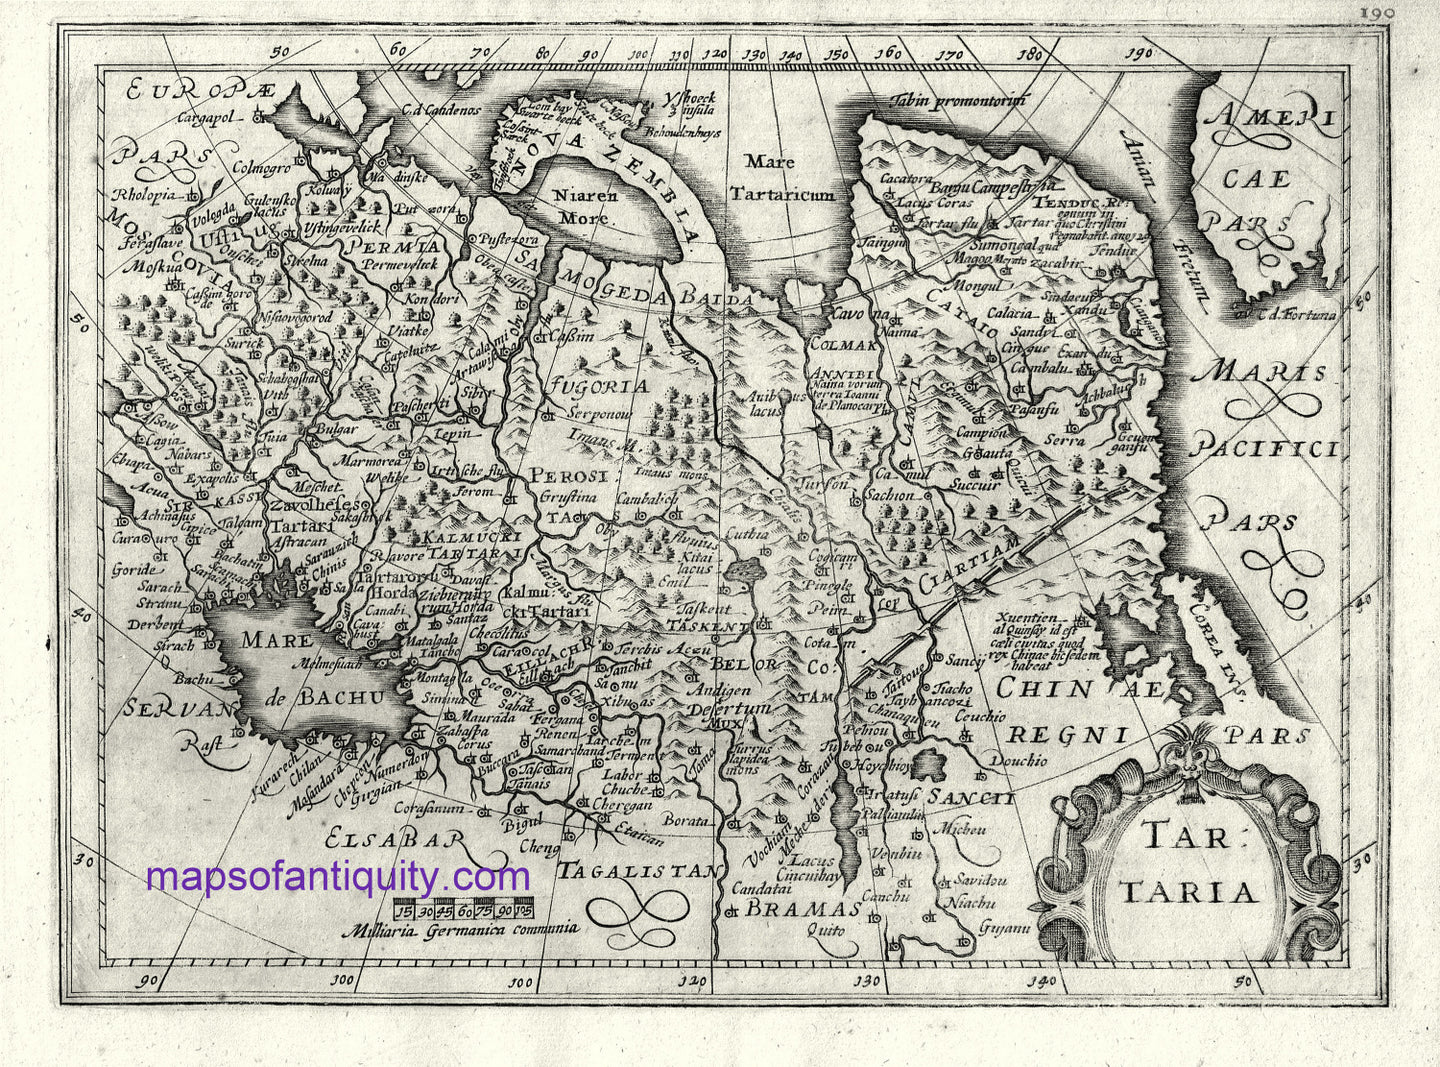 Black-&-White-Engraved-Antique-Map-Tartaria-Europe-Russia-1632-Mercator-Maps-Of-Antiquity